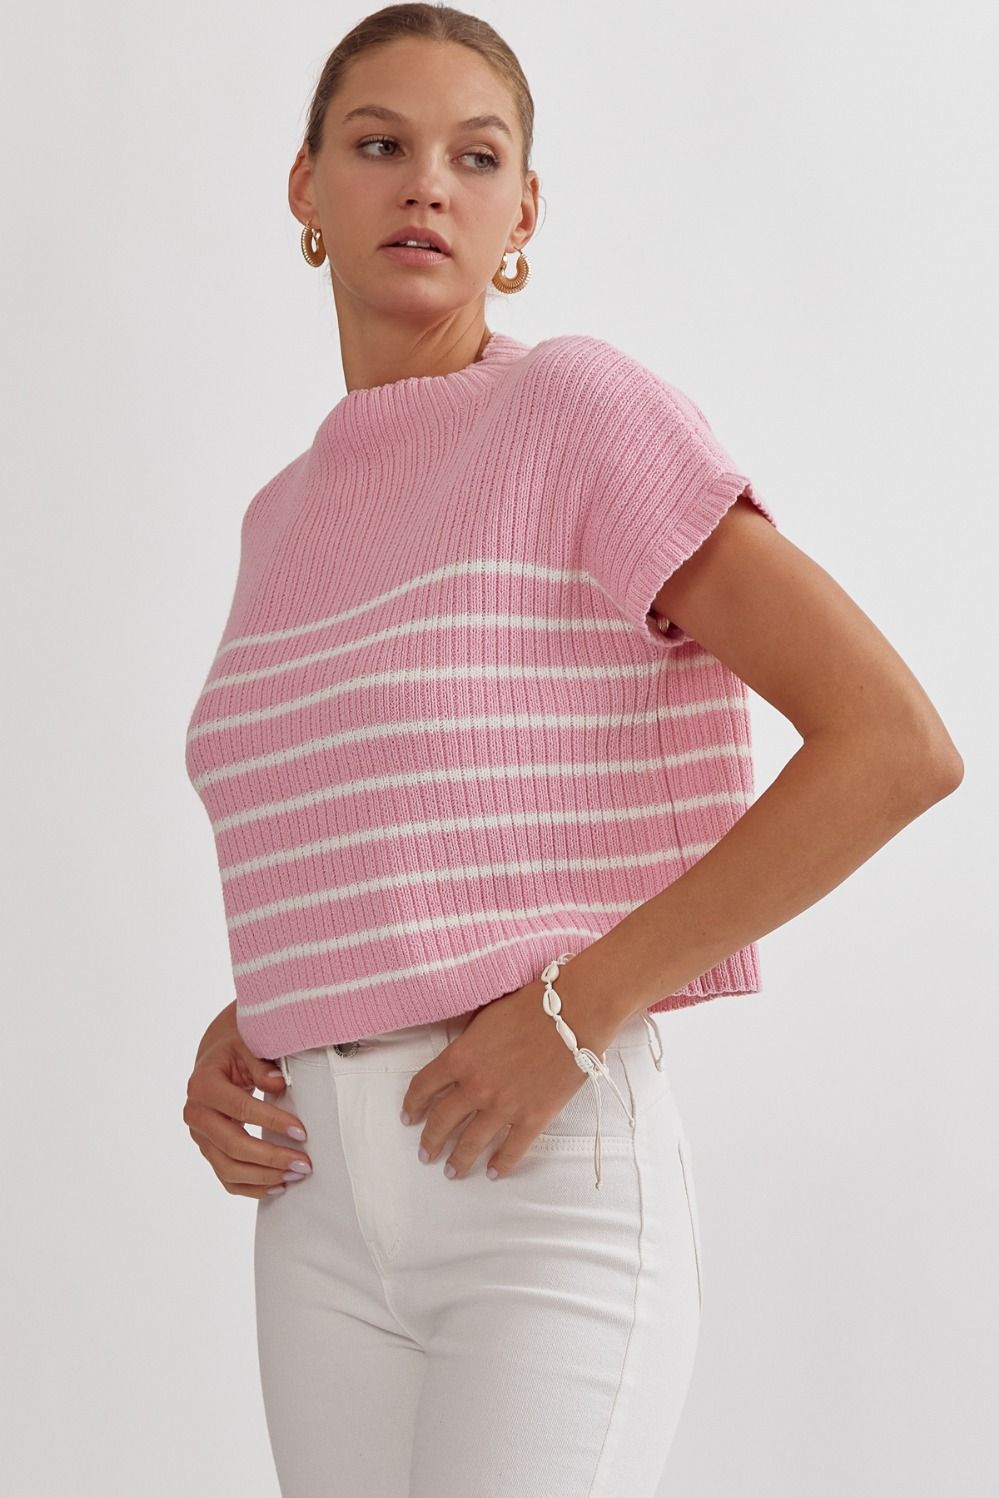 Spring Nautical Sweater - Pink